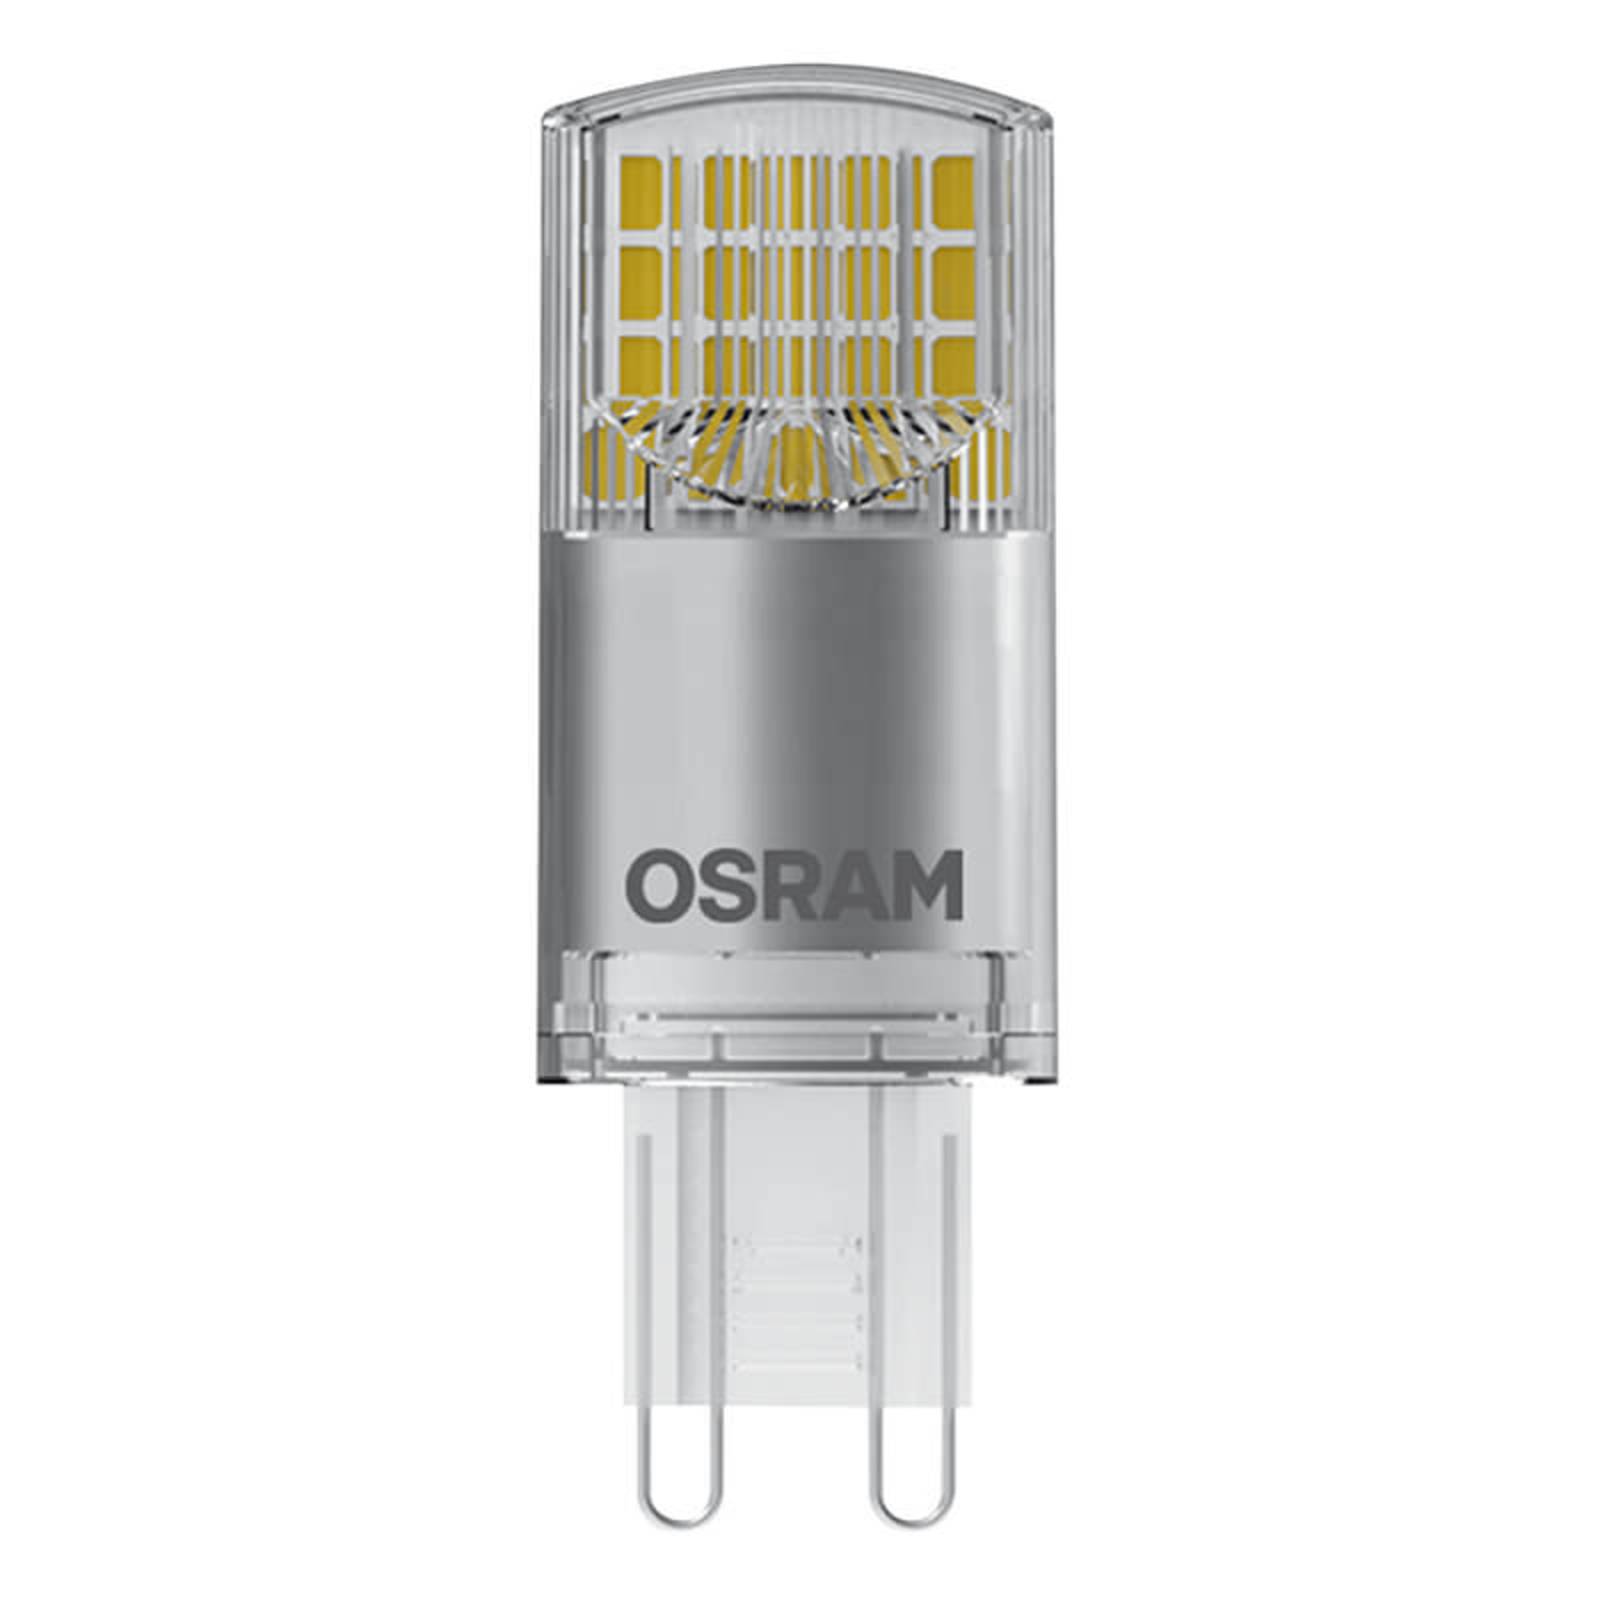 OSRAM LED-stiftpære 3,8 W, 470 lm | Lampegiganten.dk